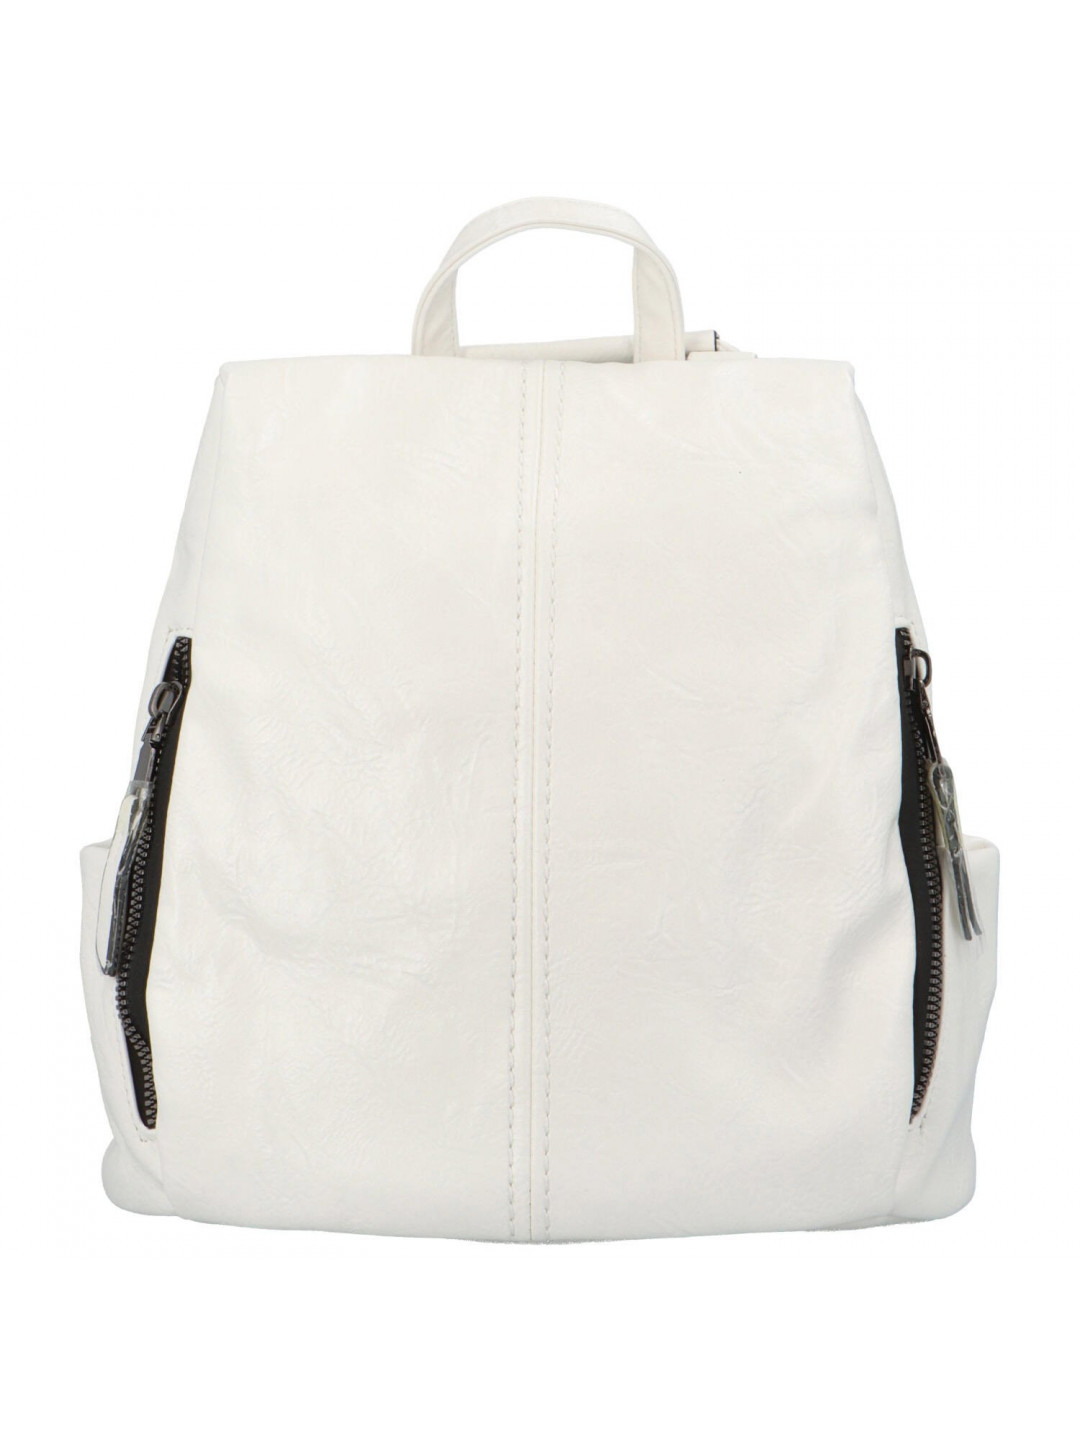 Dámský kabelko batůžek bílý – Coveri Hansie